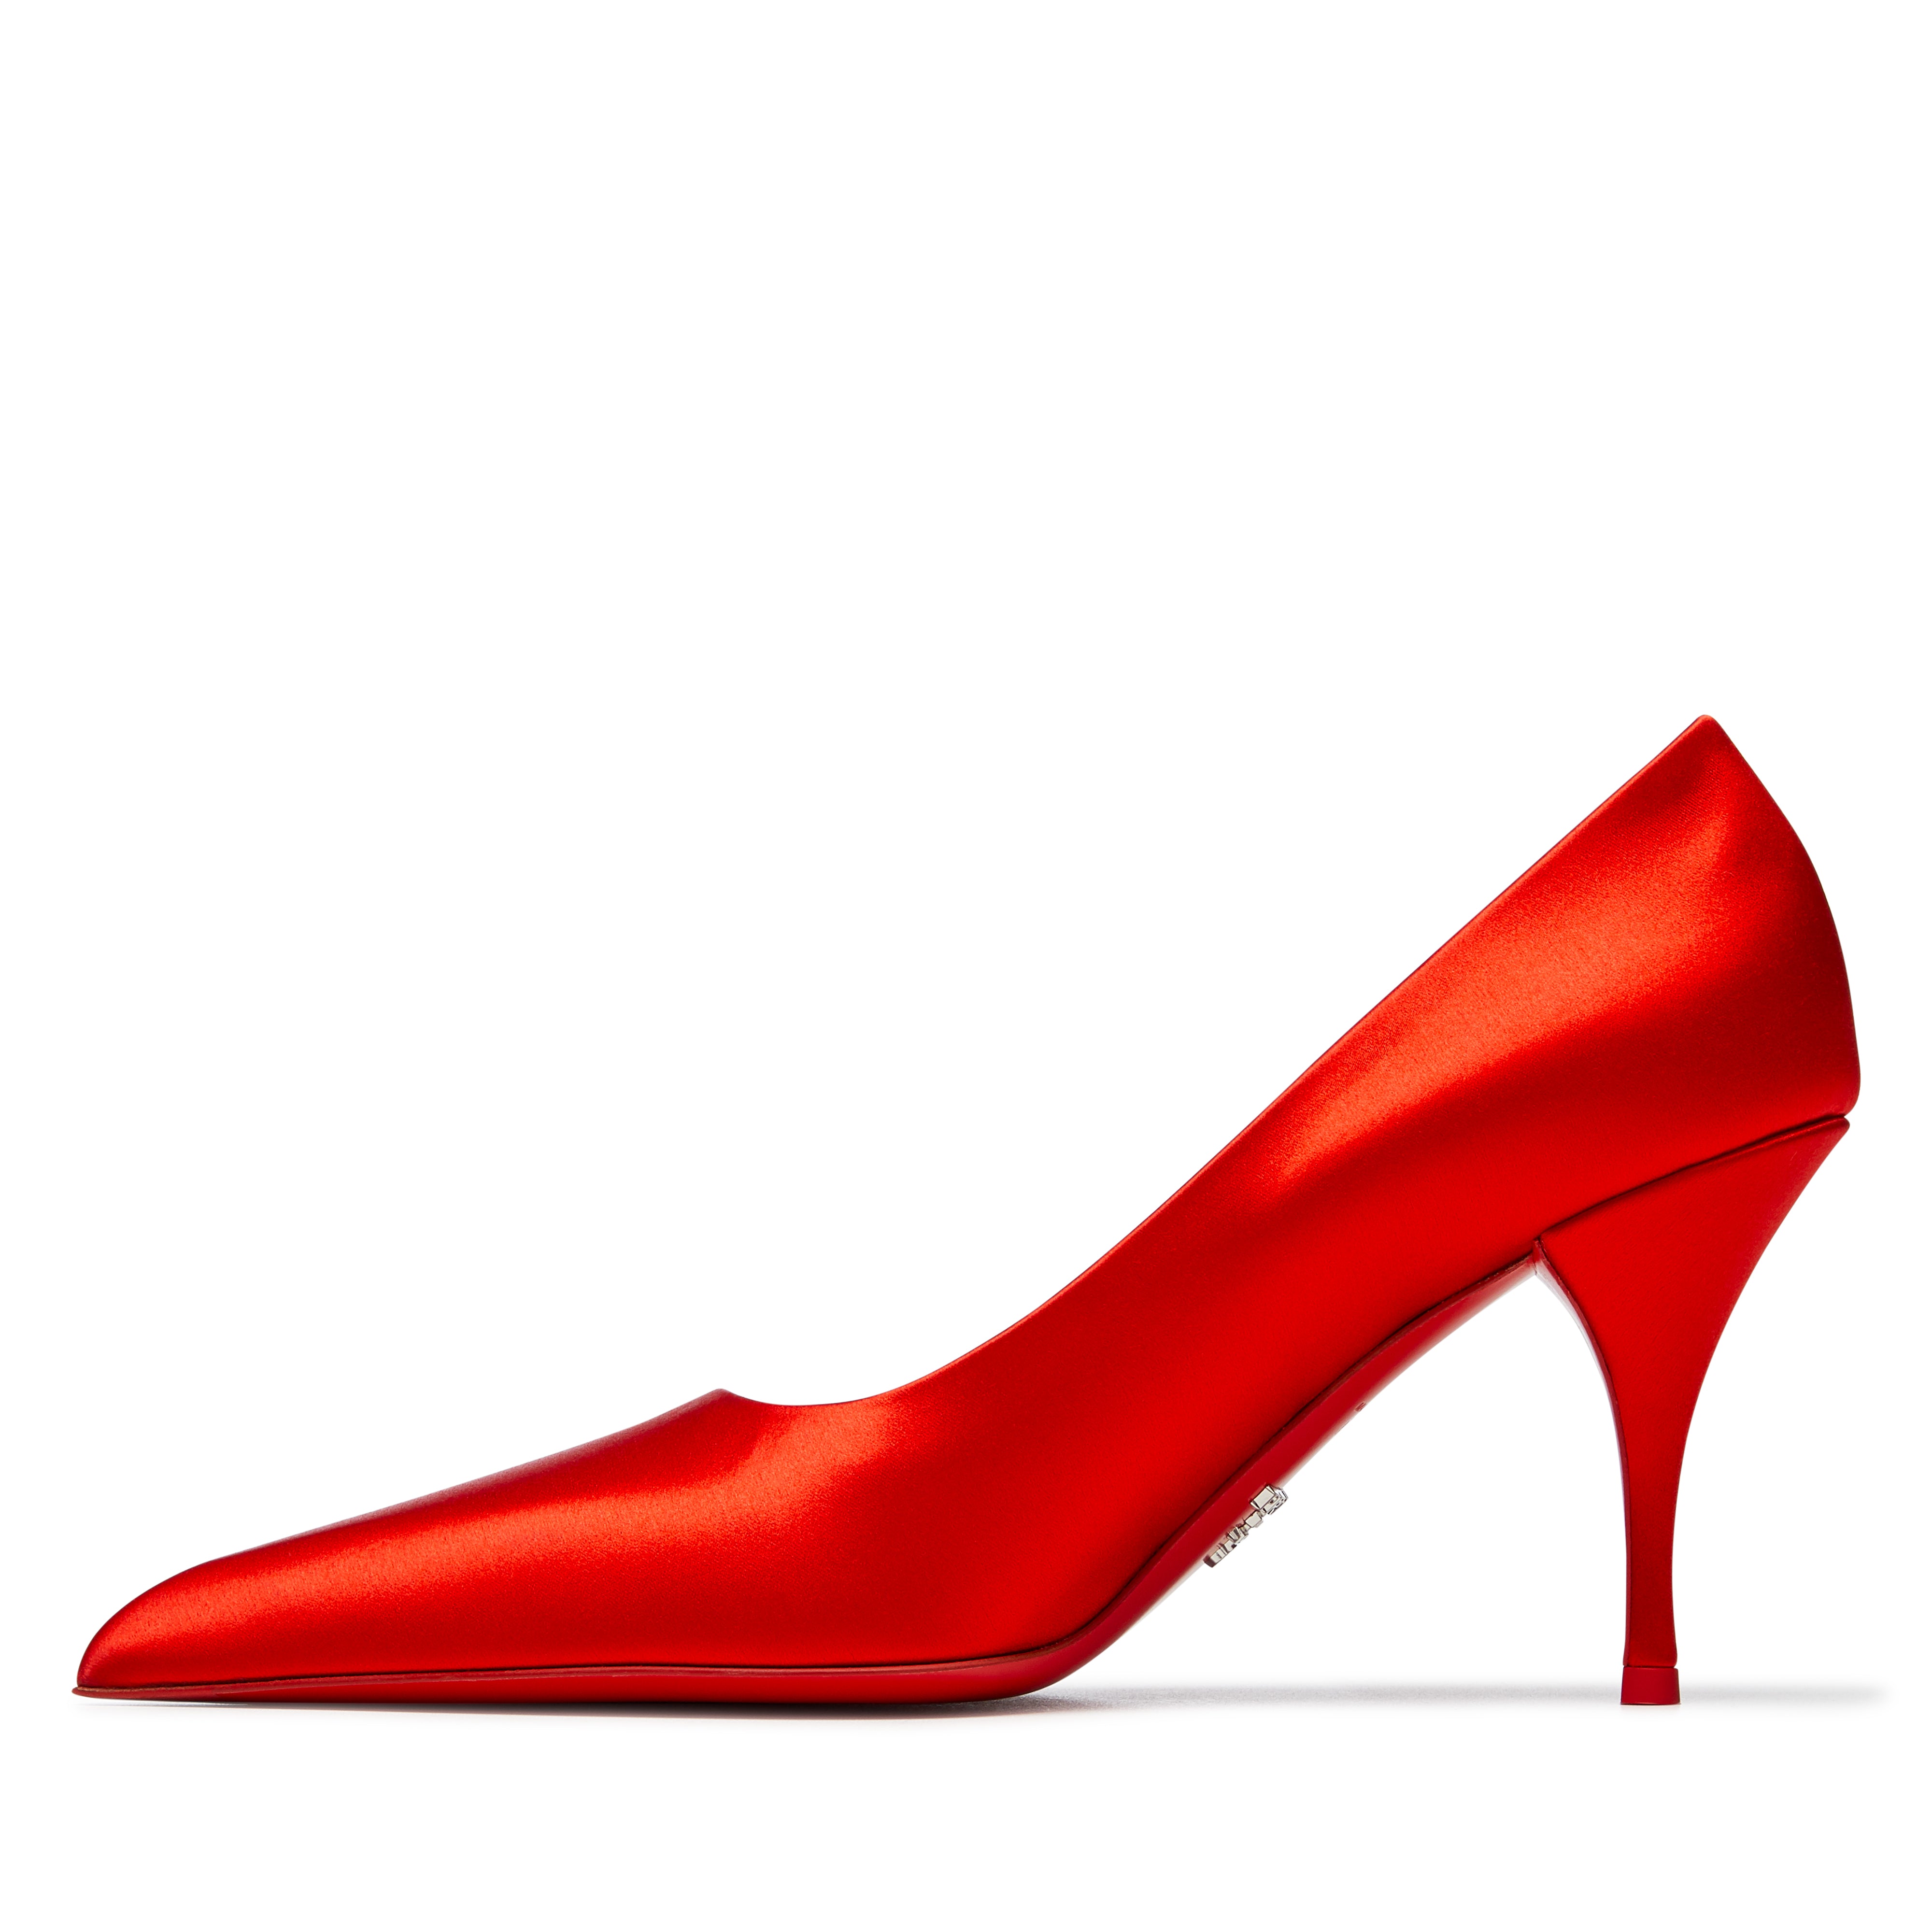 Prada - Women's Satin Pumps - (Red)